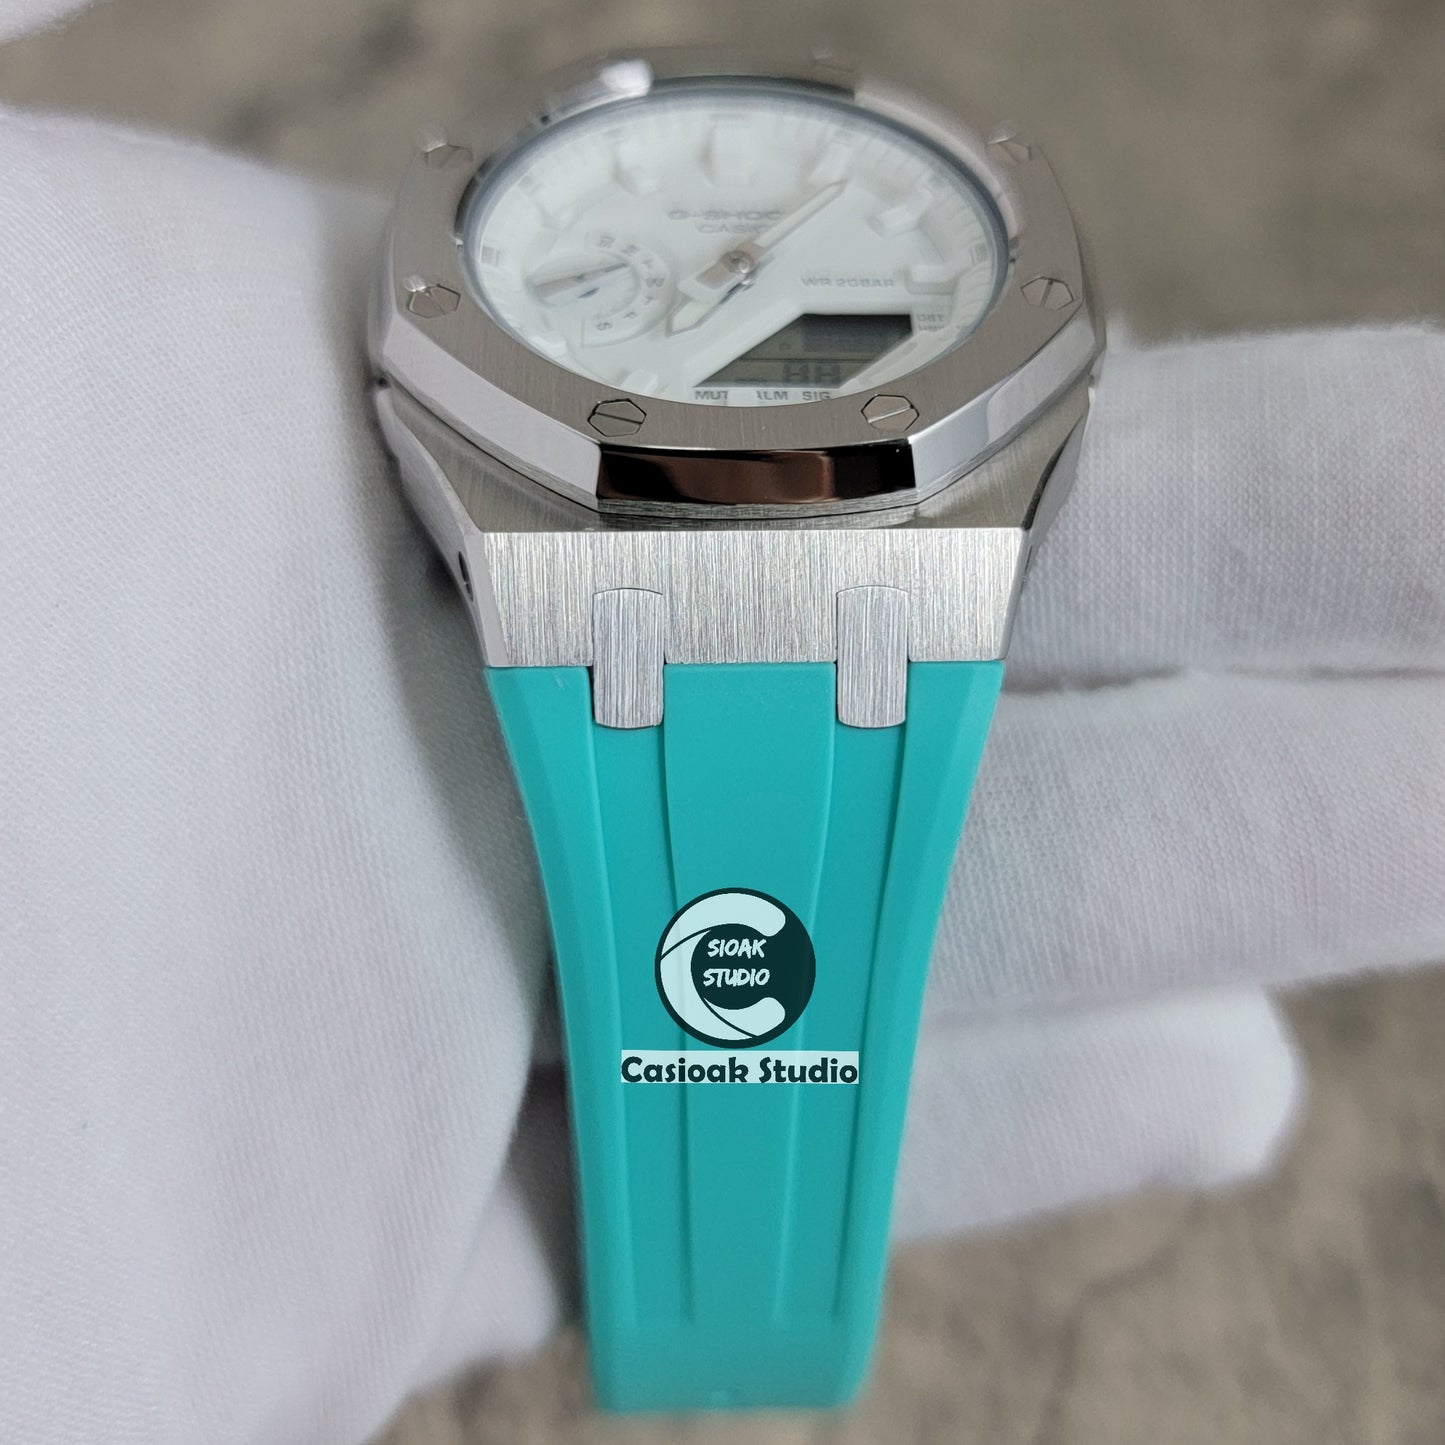 Casioak Mod Watch Silver Case Tiffany Rubber Strap White Time Mark White Dial 42mm - Casioak Studio